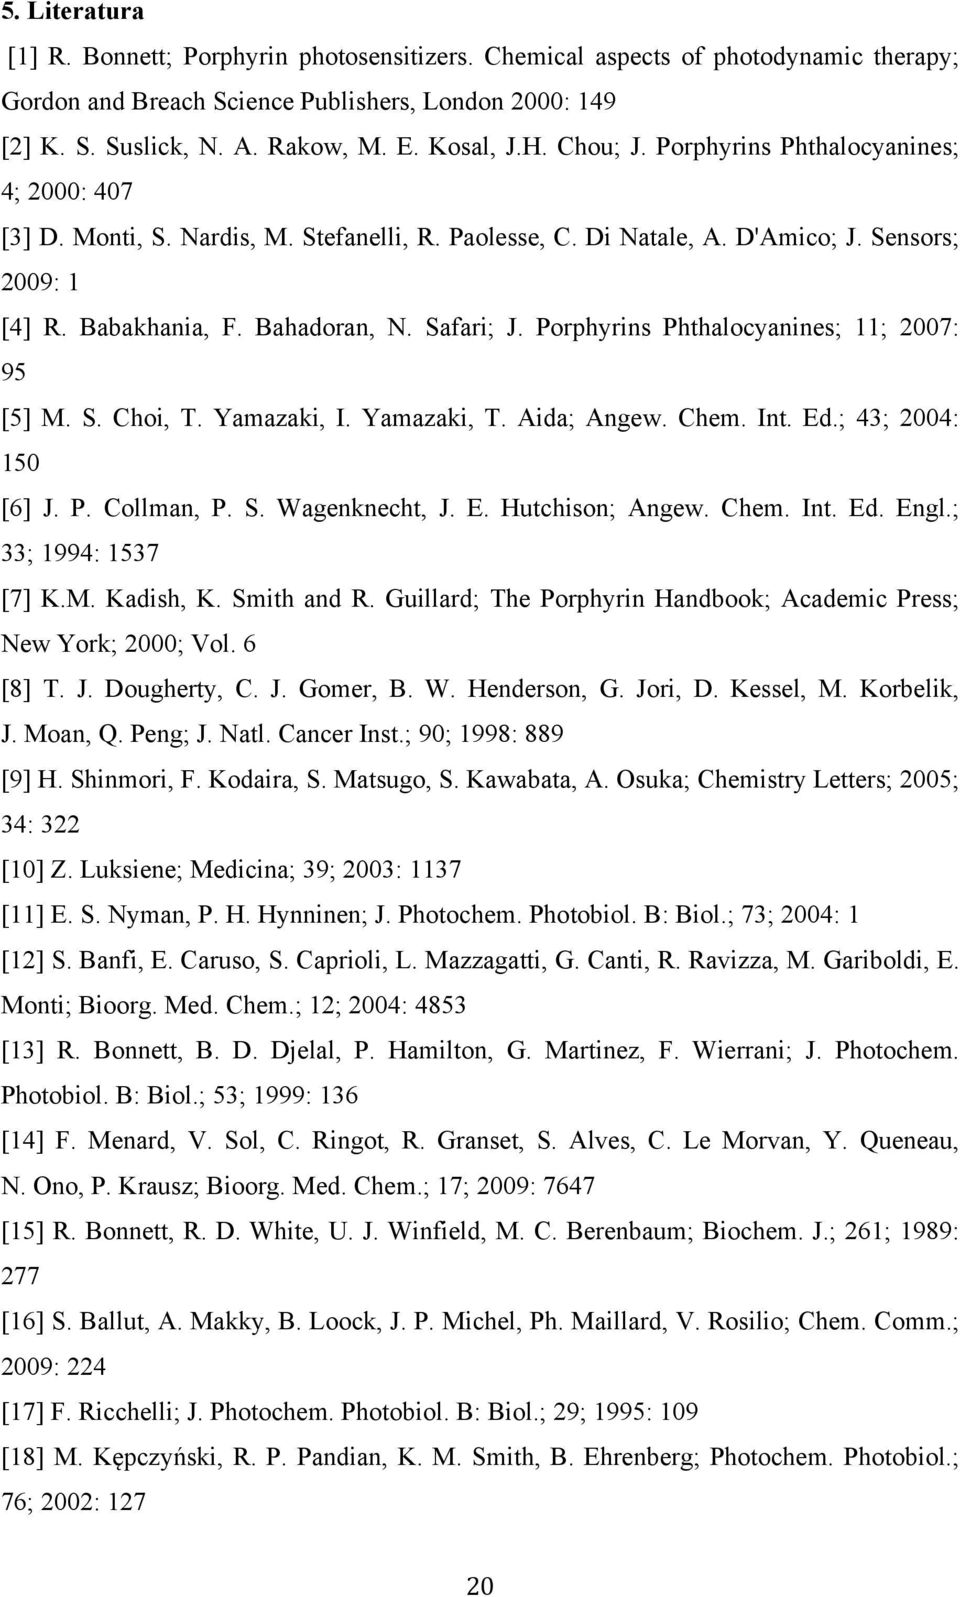 Porphyrins Phthalocyanines; 11; 2007: 95 [5] M. S. Choi, T. Yamazaki, I. Yamazaki, T. Aida; Angew. Chem. Int. Ed.; 43; 2004: 150 [6] J. P. Collman, P. S. Wagenknecht, J. E. Hutchison; Angew. Chem. Int. Ed. Engl.